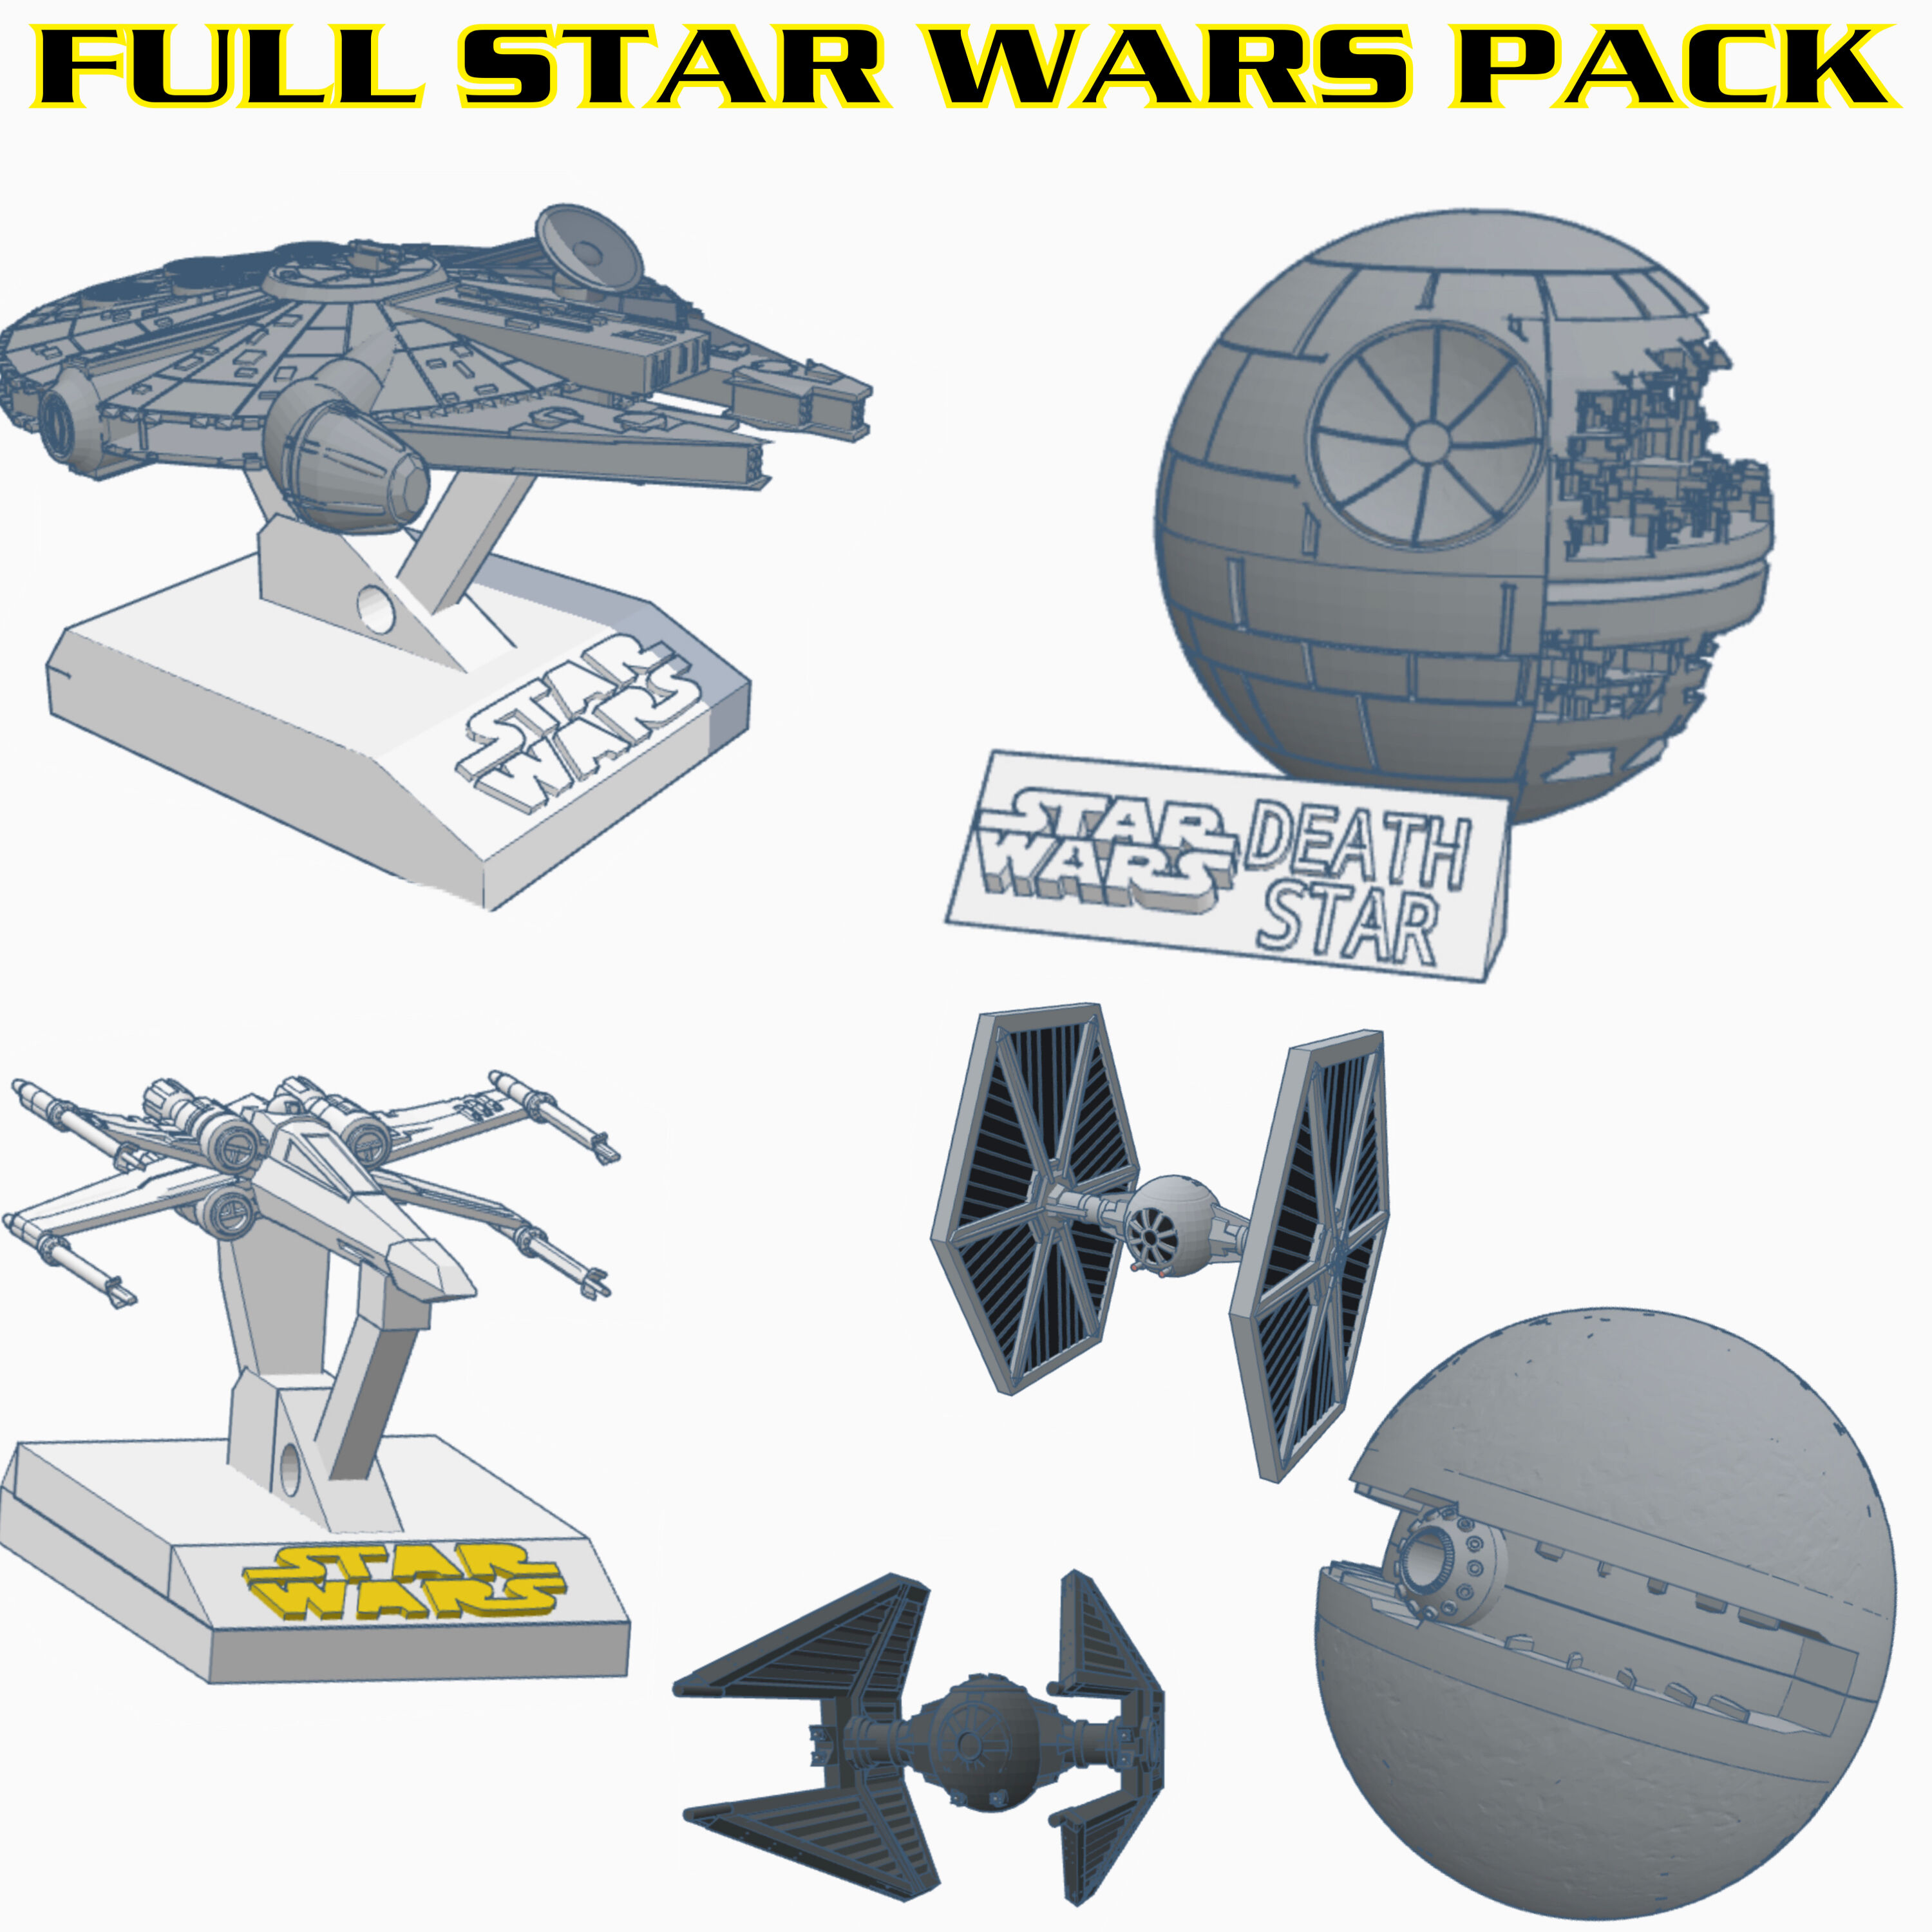 Full Star Wars pack *LIMITED OFFER*